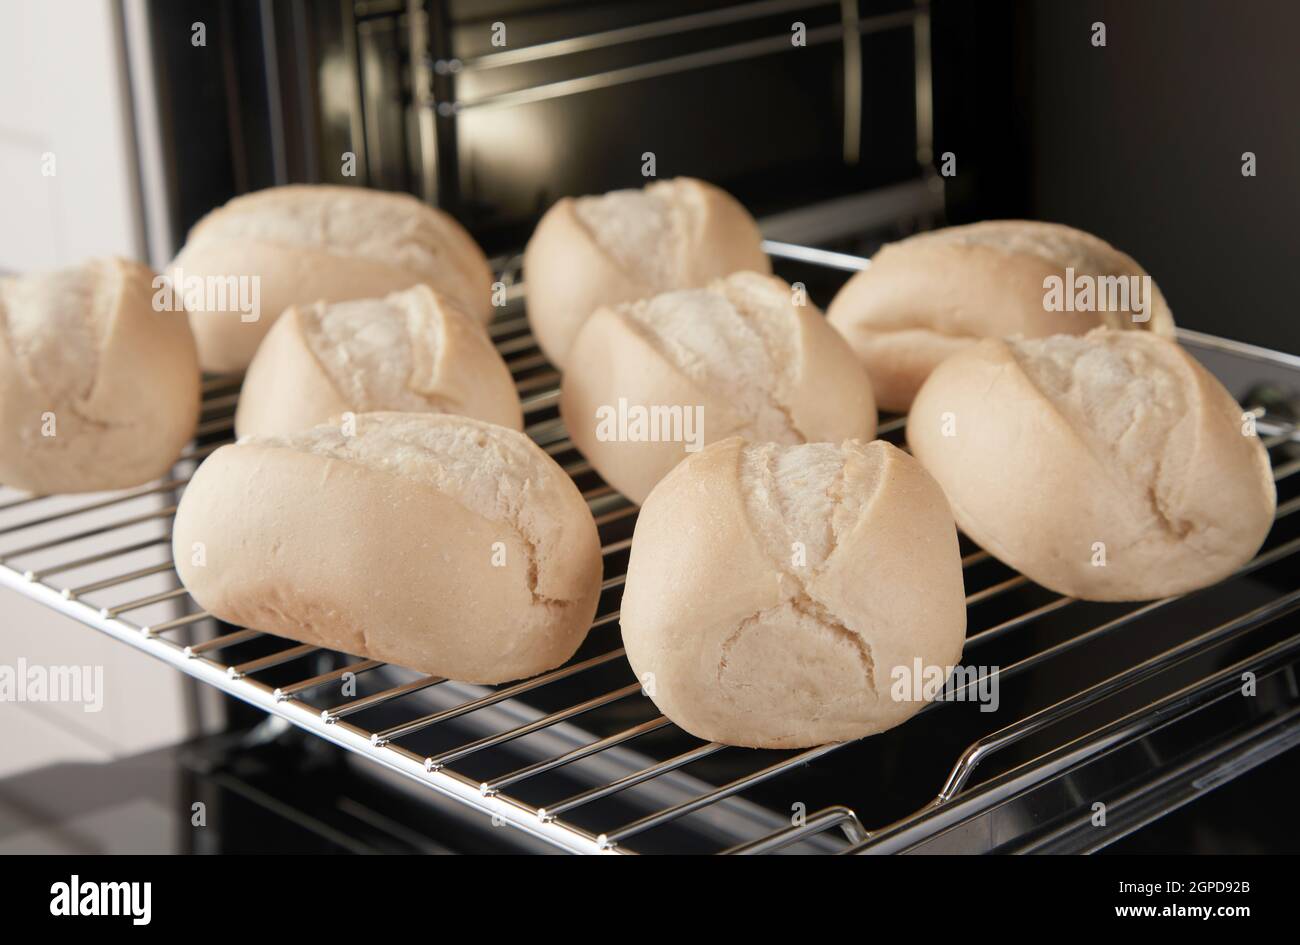 https://c8.alamy.com/comp/2GPD92B/set-of-unbaked-bread-roll-buns-placed-on-rack-inside-of-baking-oven-2GPD92B.jpg